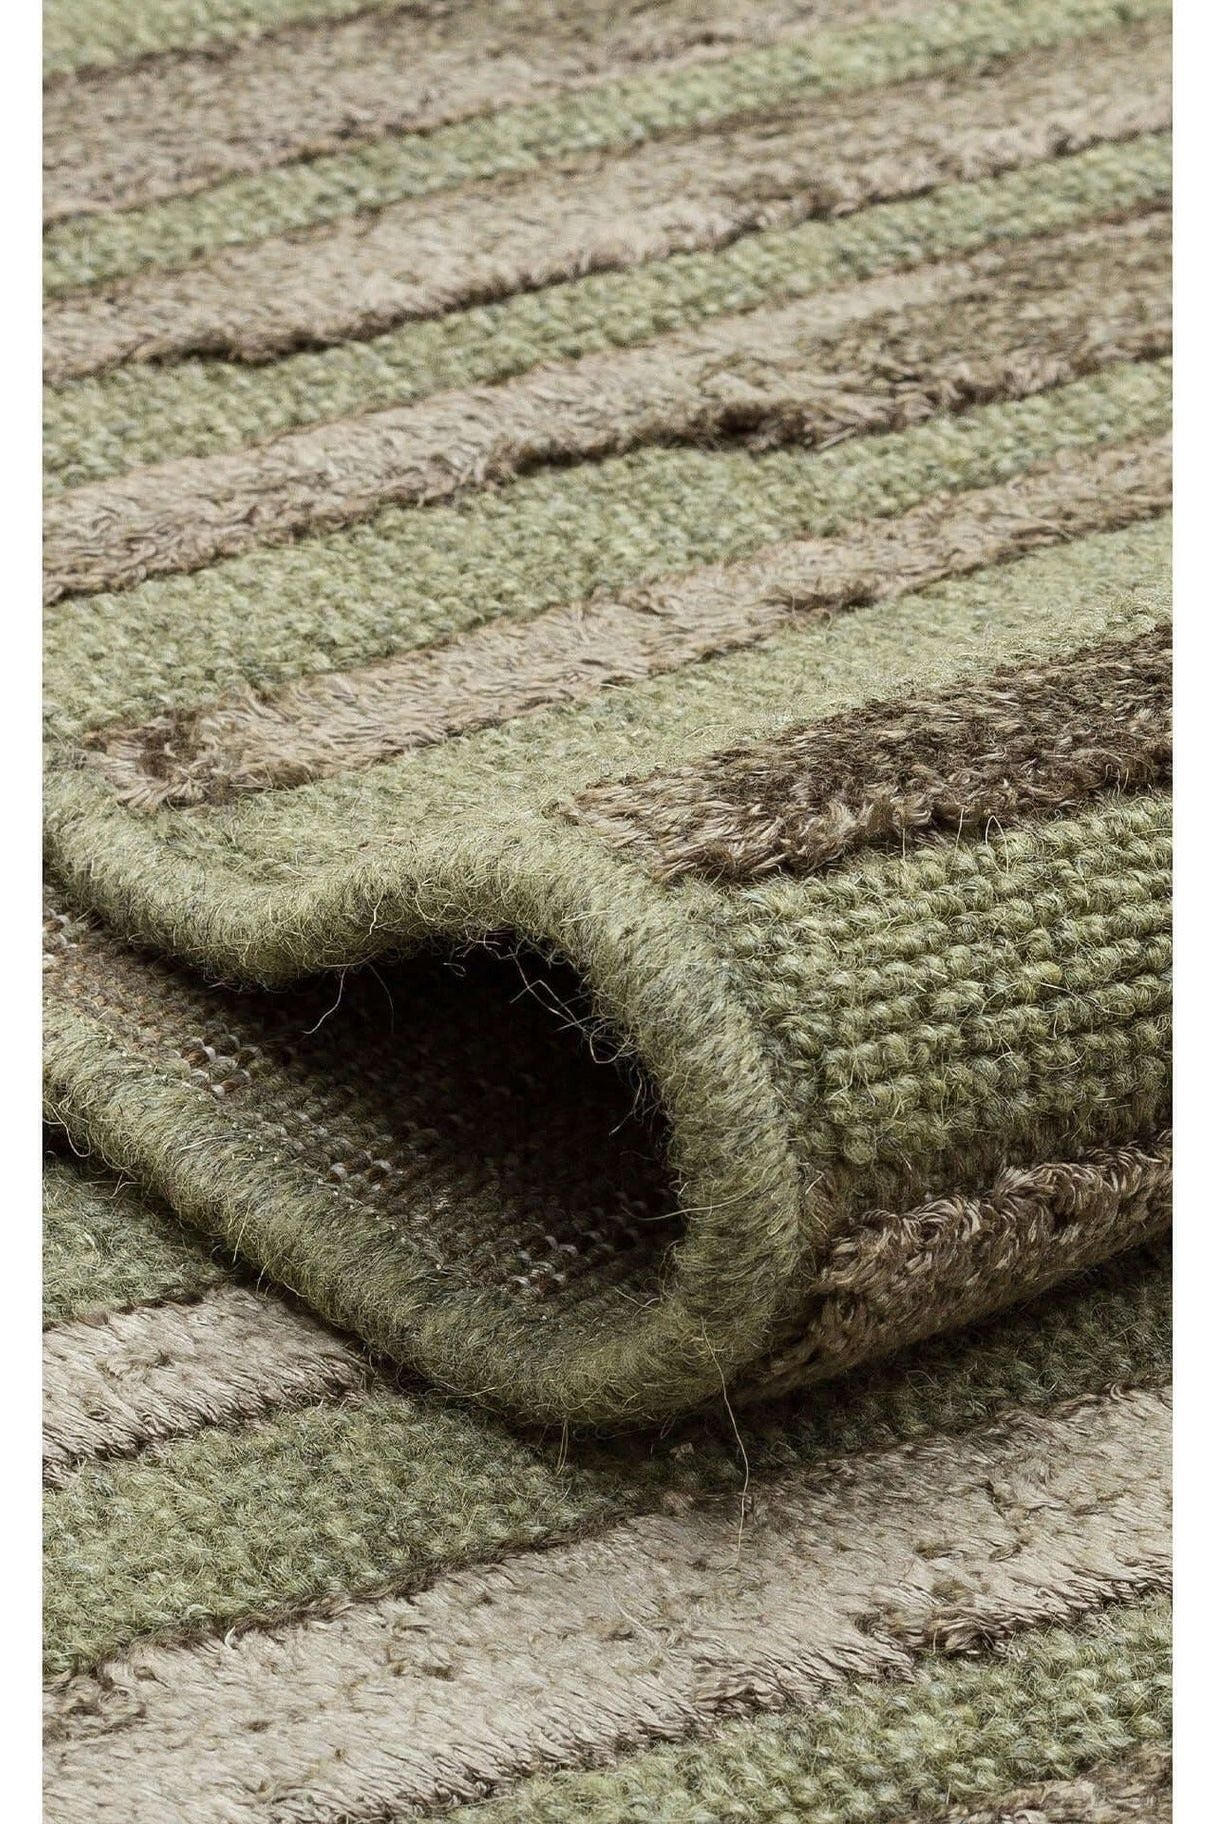 #Turkish_Carpets_Rugs# #Modern_Carpets# #Abrash_Carpets#Znt 02 Green Dyed